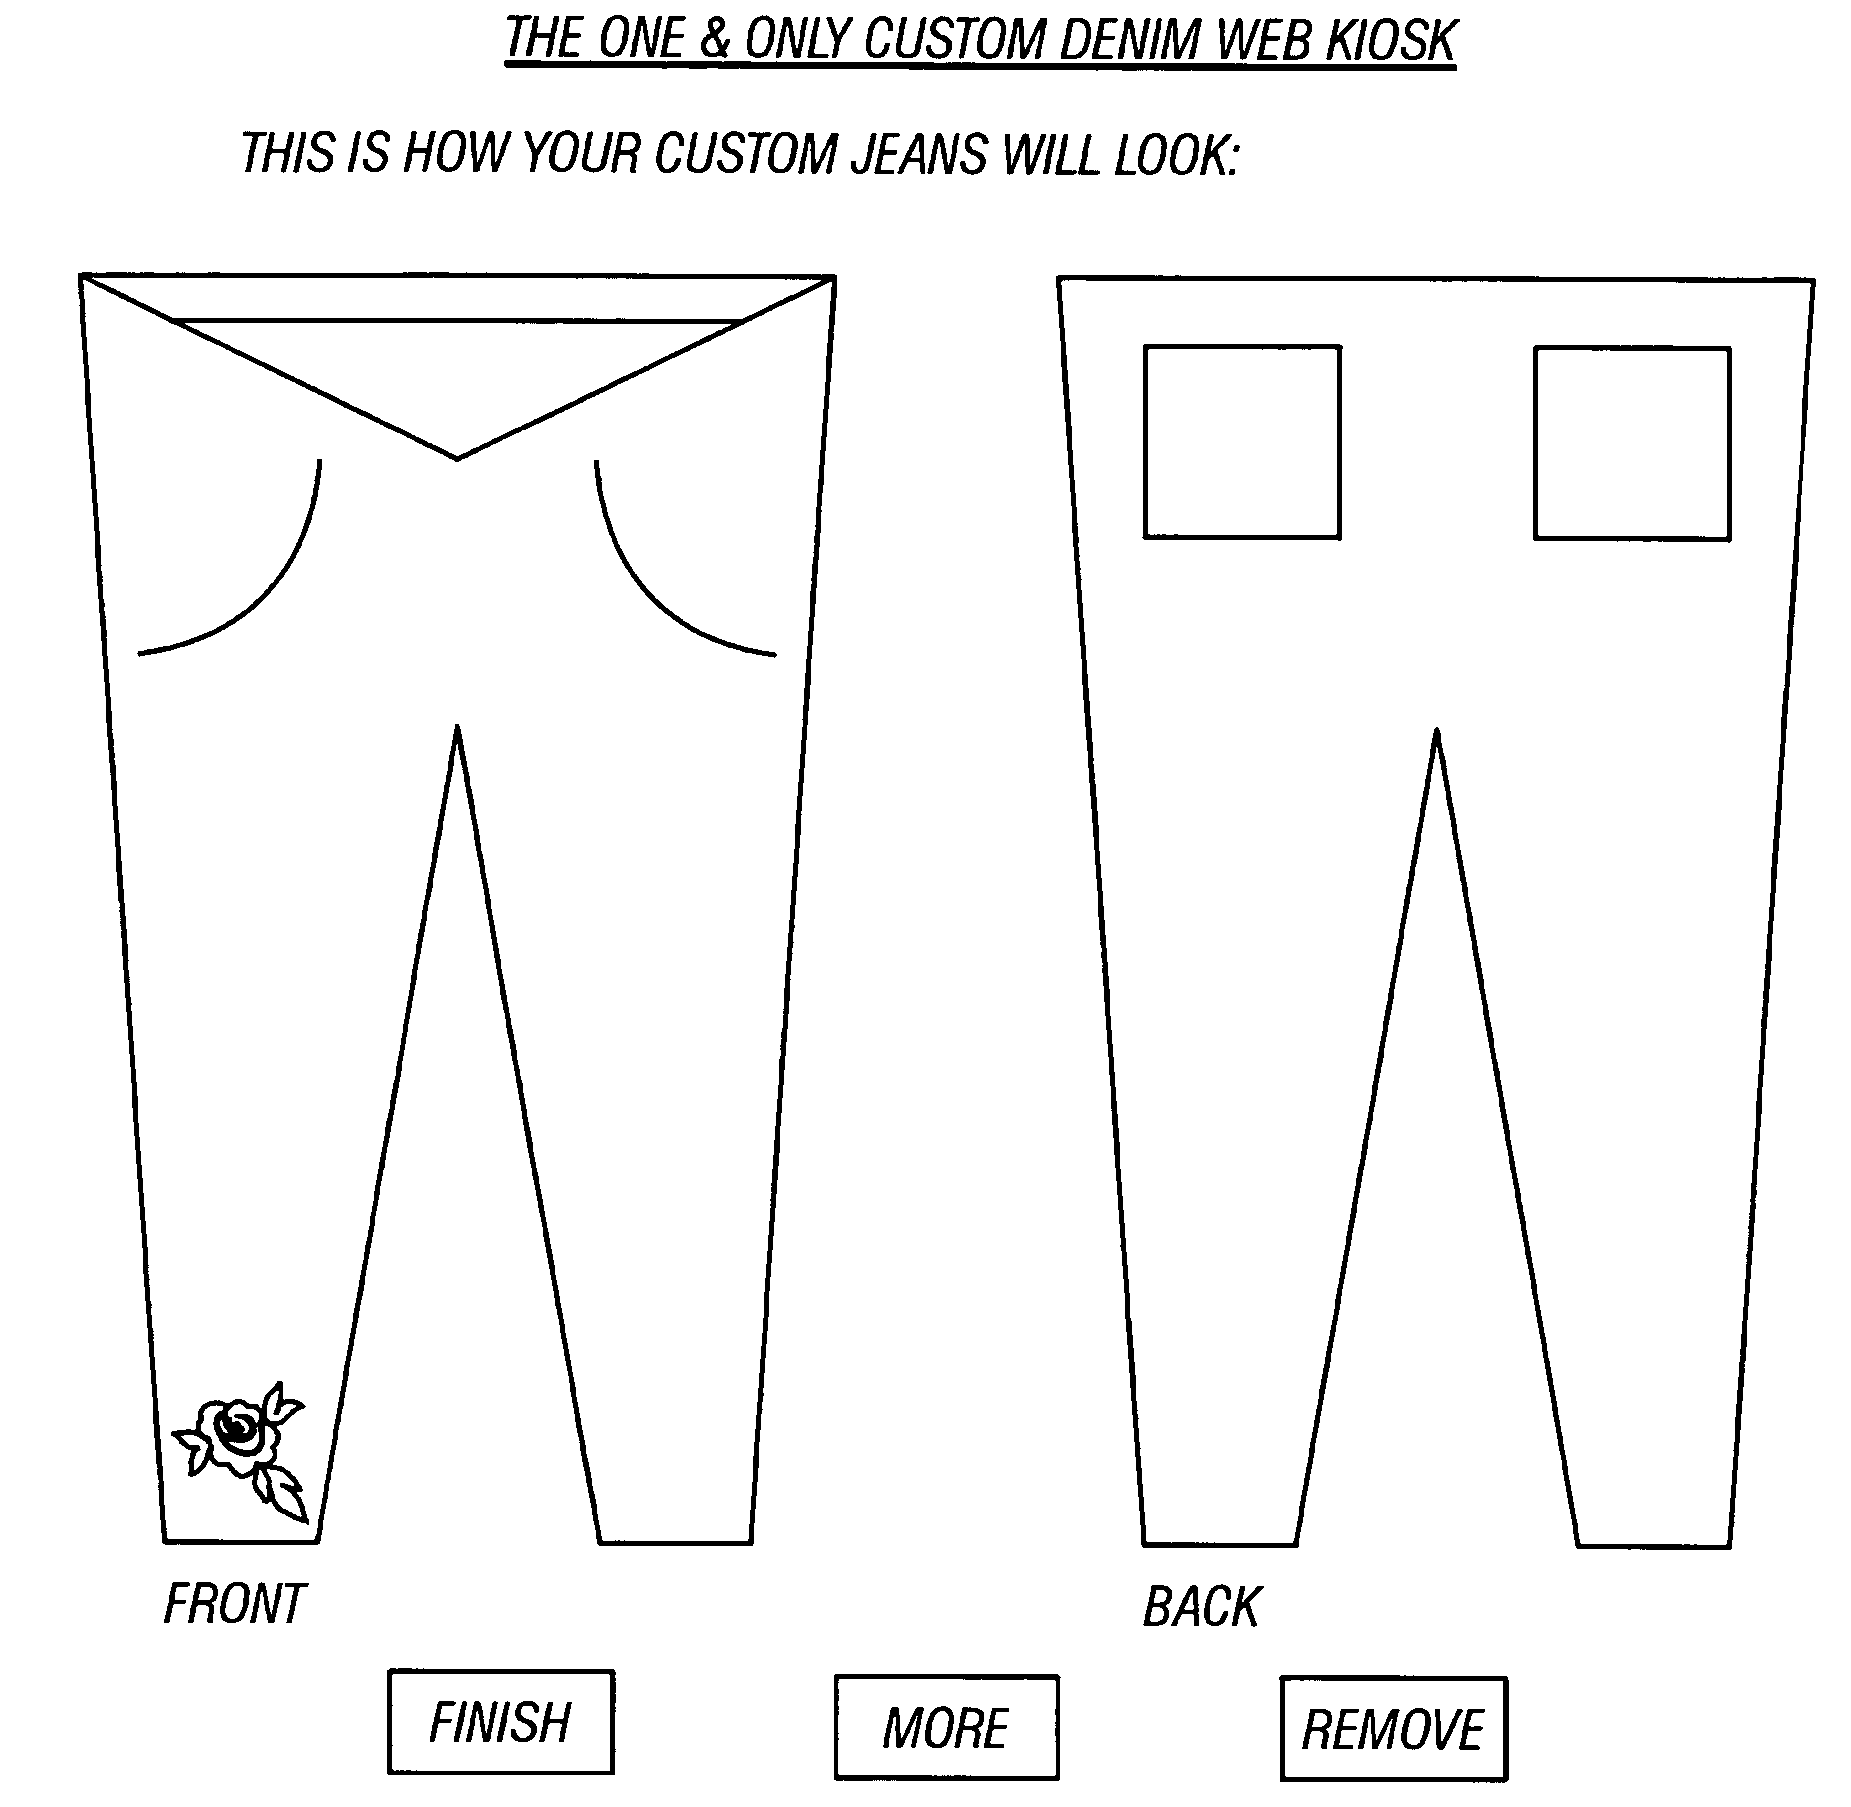 Internet customization of apparel